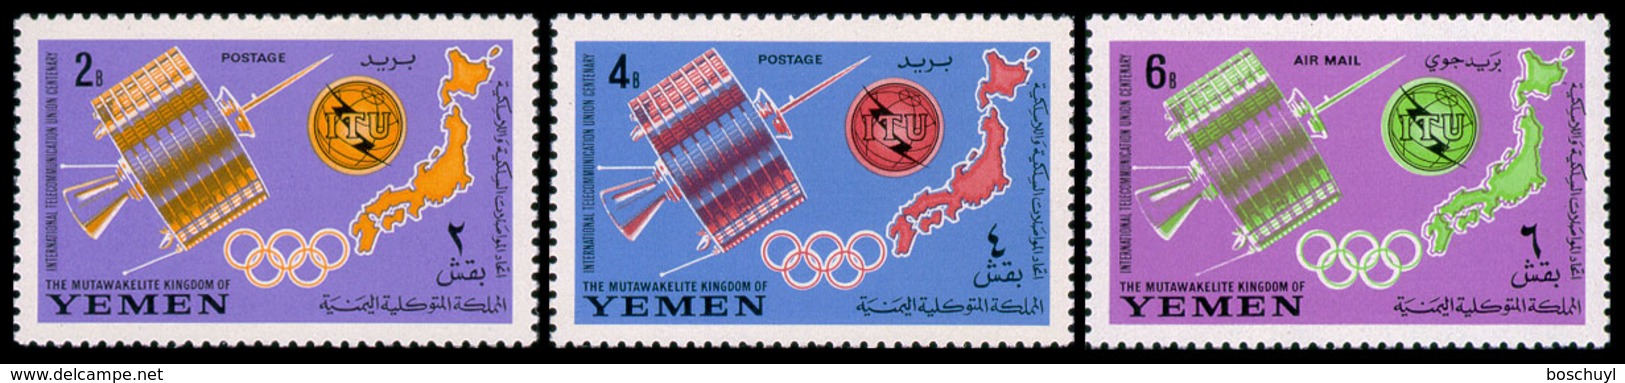 Yemen Kingdom, 1965, ITU Centenary, International Telecommunication Union, United Nations, Space, MNH, Michel 145-147A - Yémen